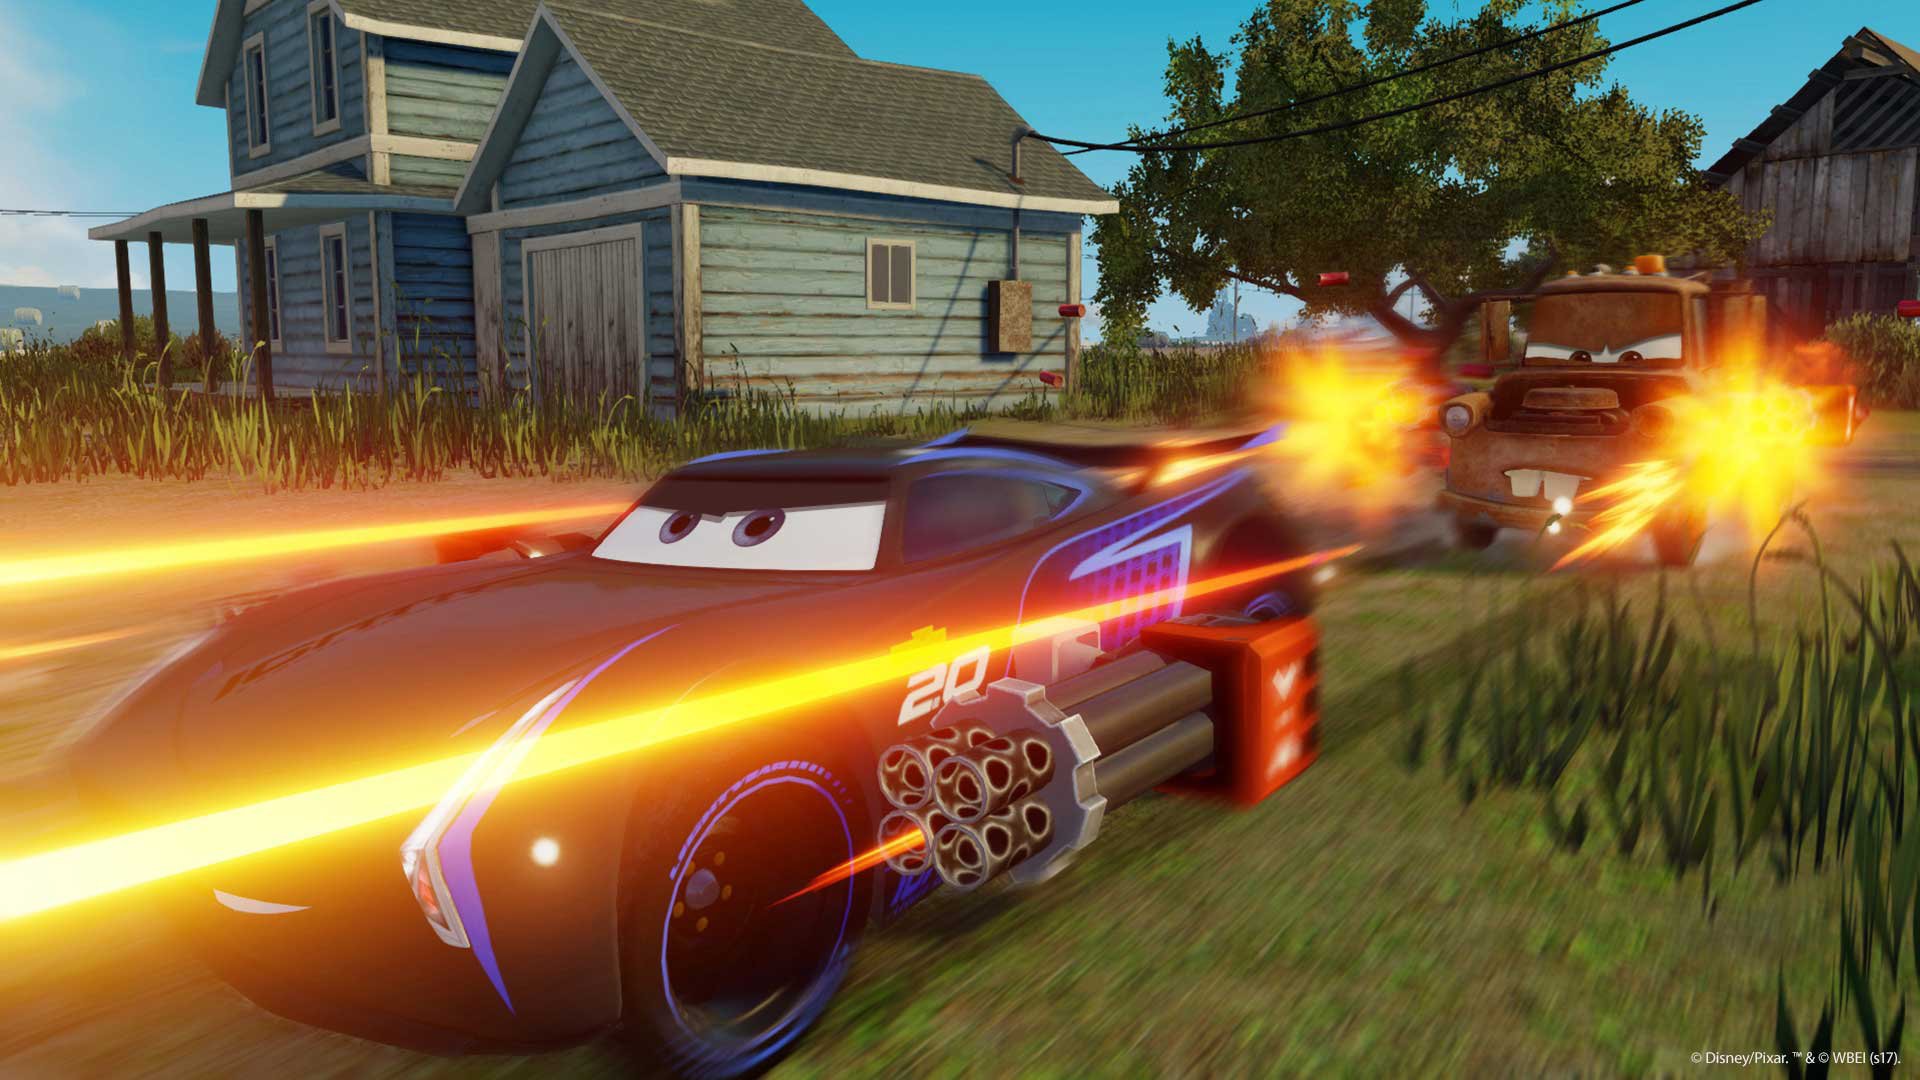 cars 3 game download